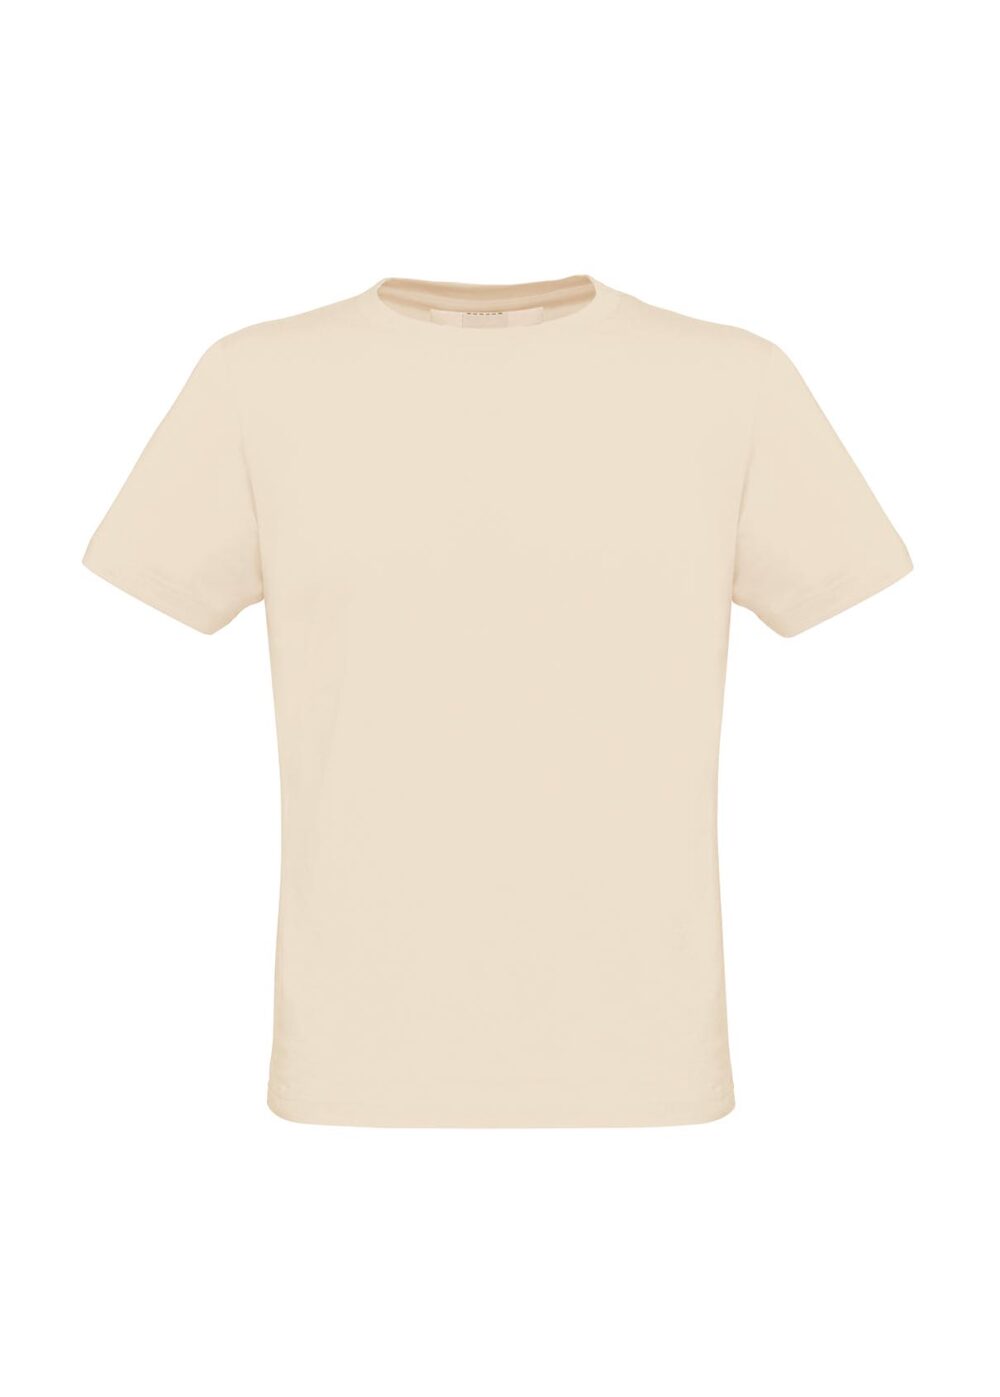 T-shirt uomo manica corta girocollo cotone biologico certificato EKO BCTMB02